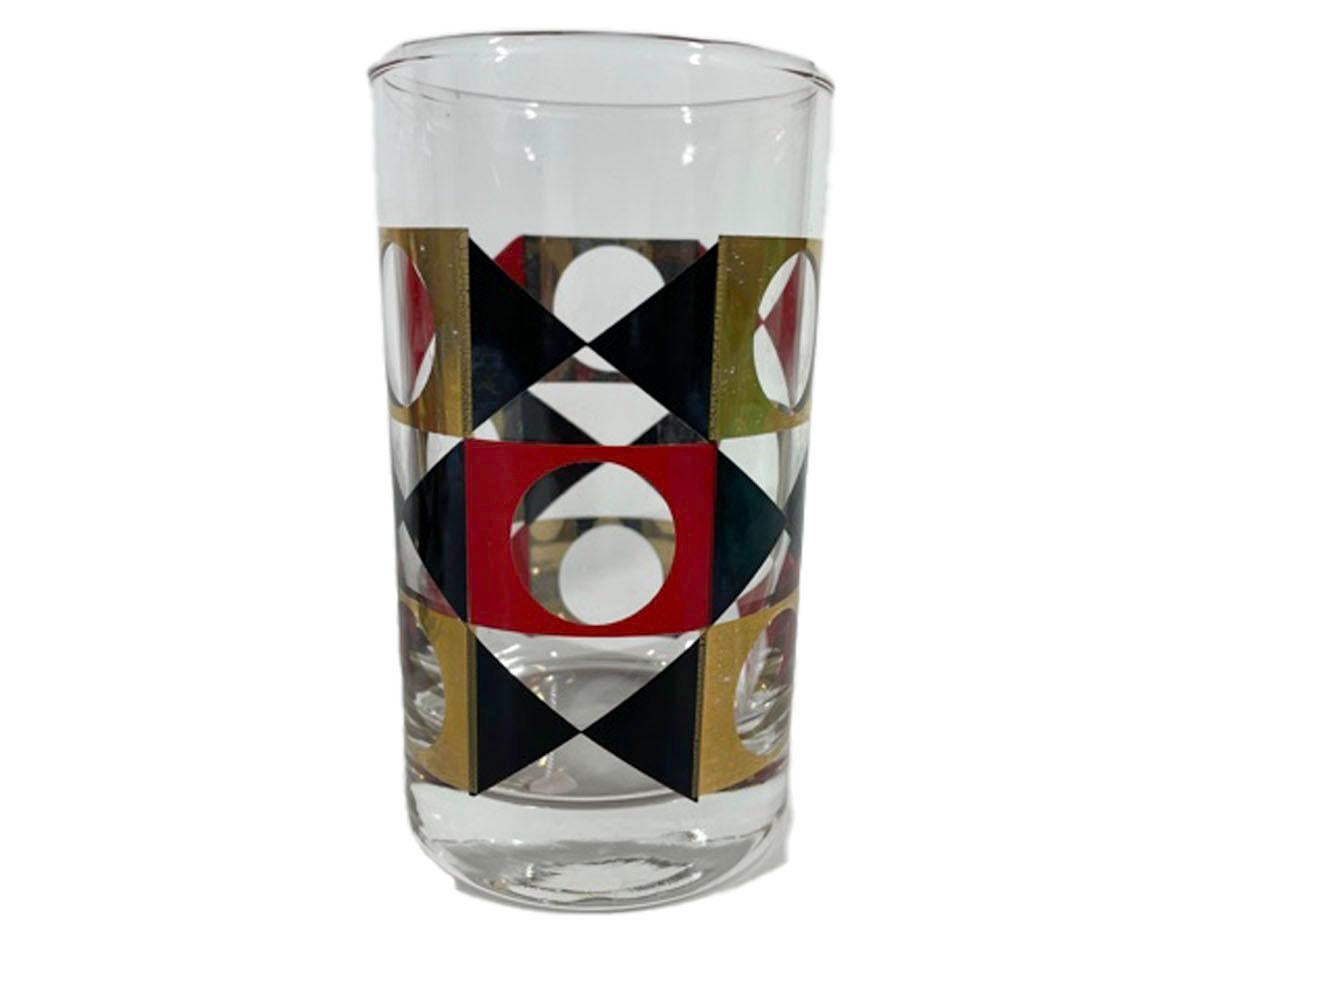 Set of 6 Vintage Geometric Cocktail Glasses in Red & Black Enamel with 22k Gold For Sale 2